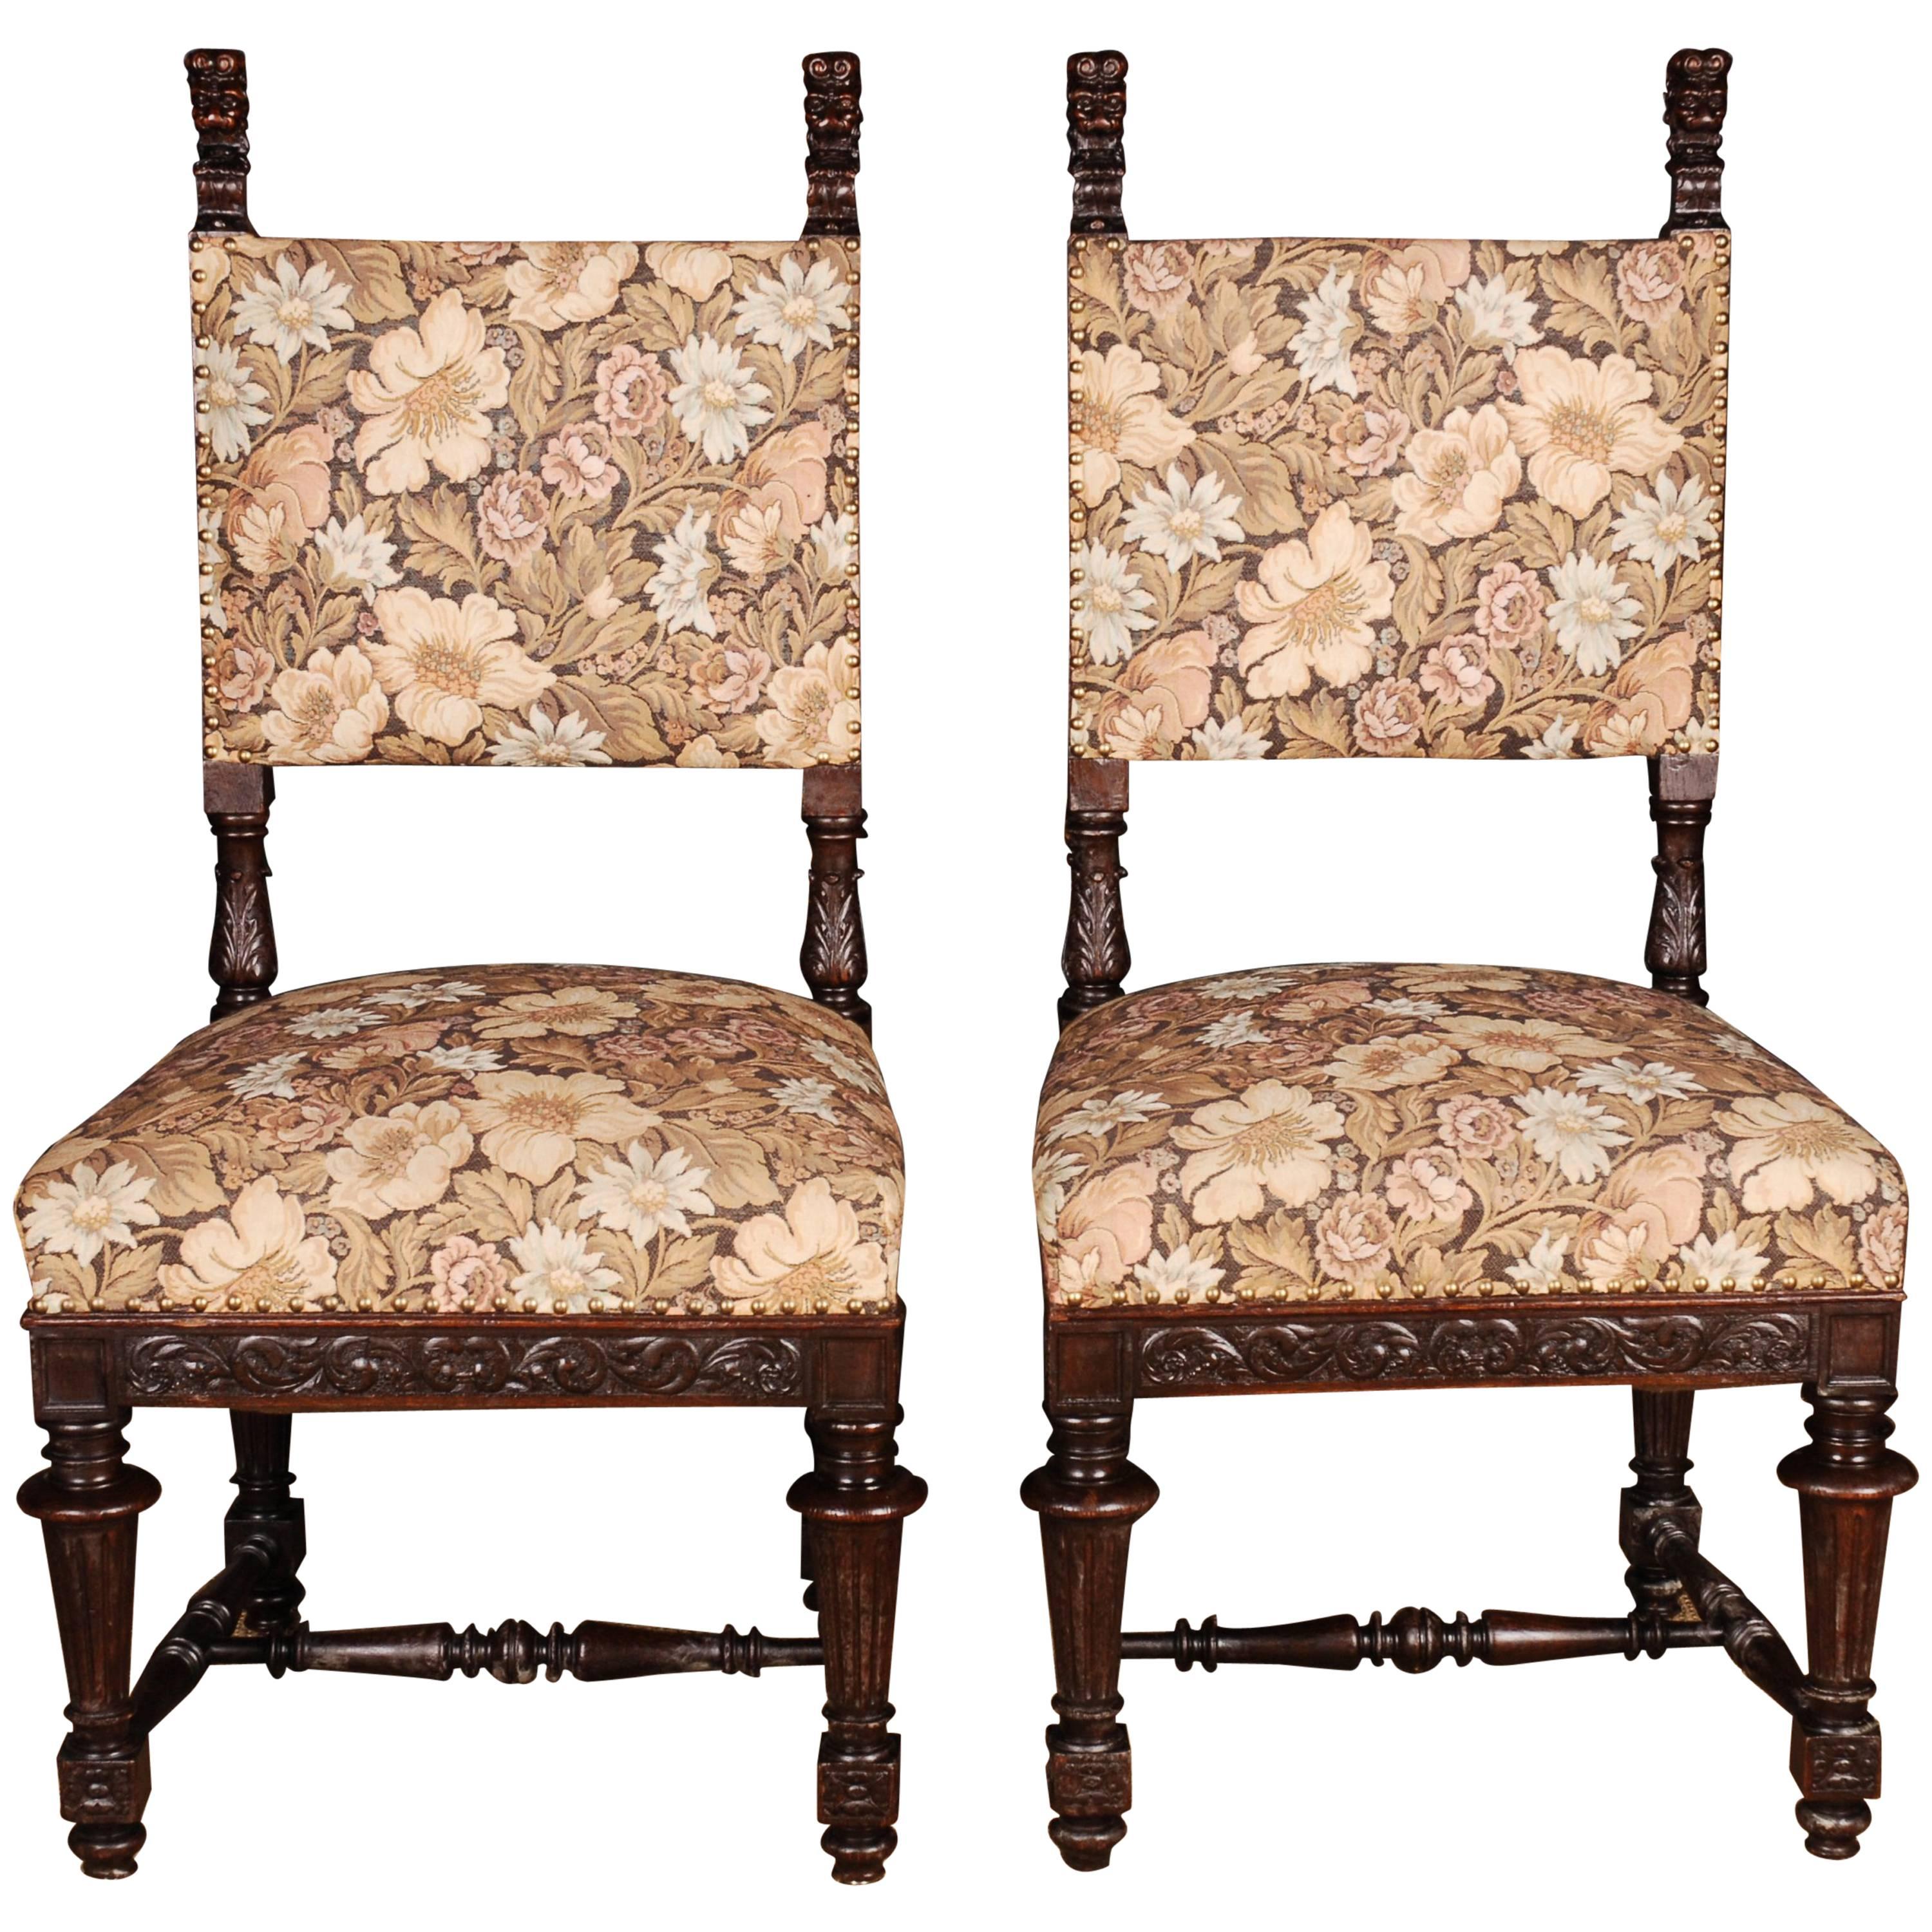 Two Neo Renaissance Chairs, circa 1870-1880